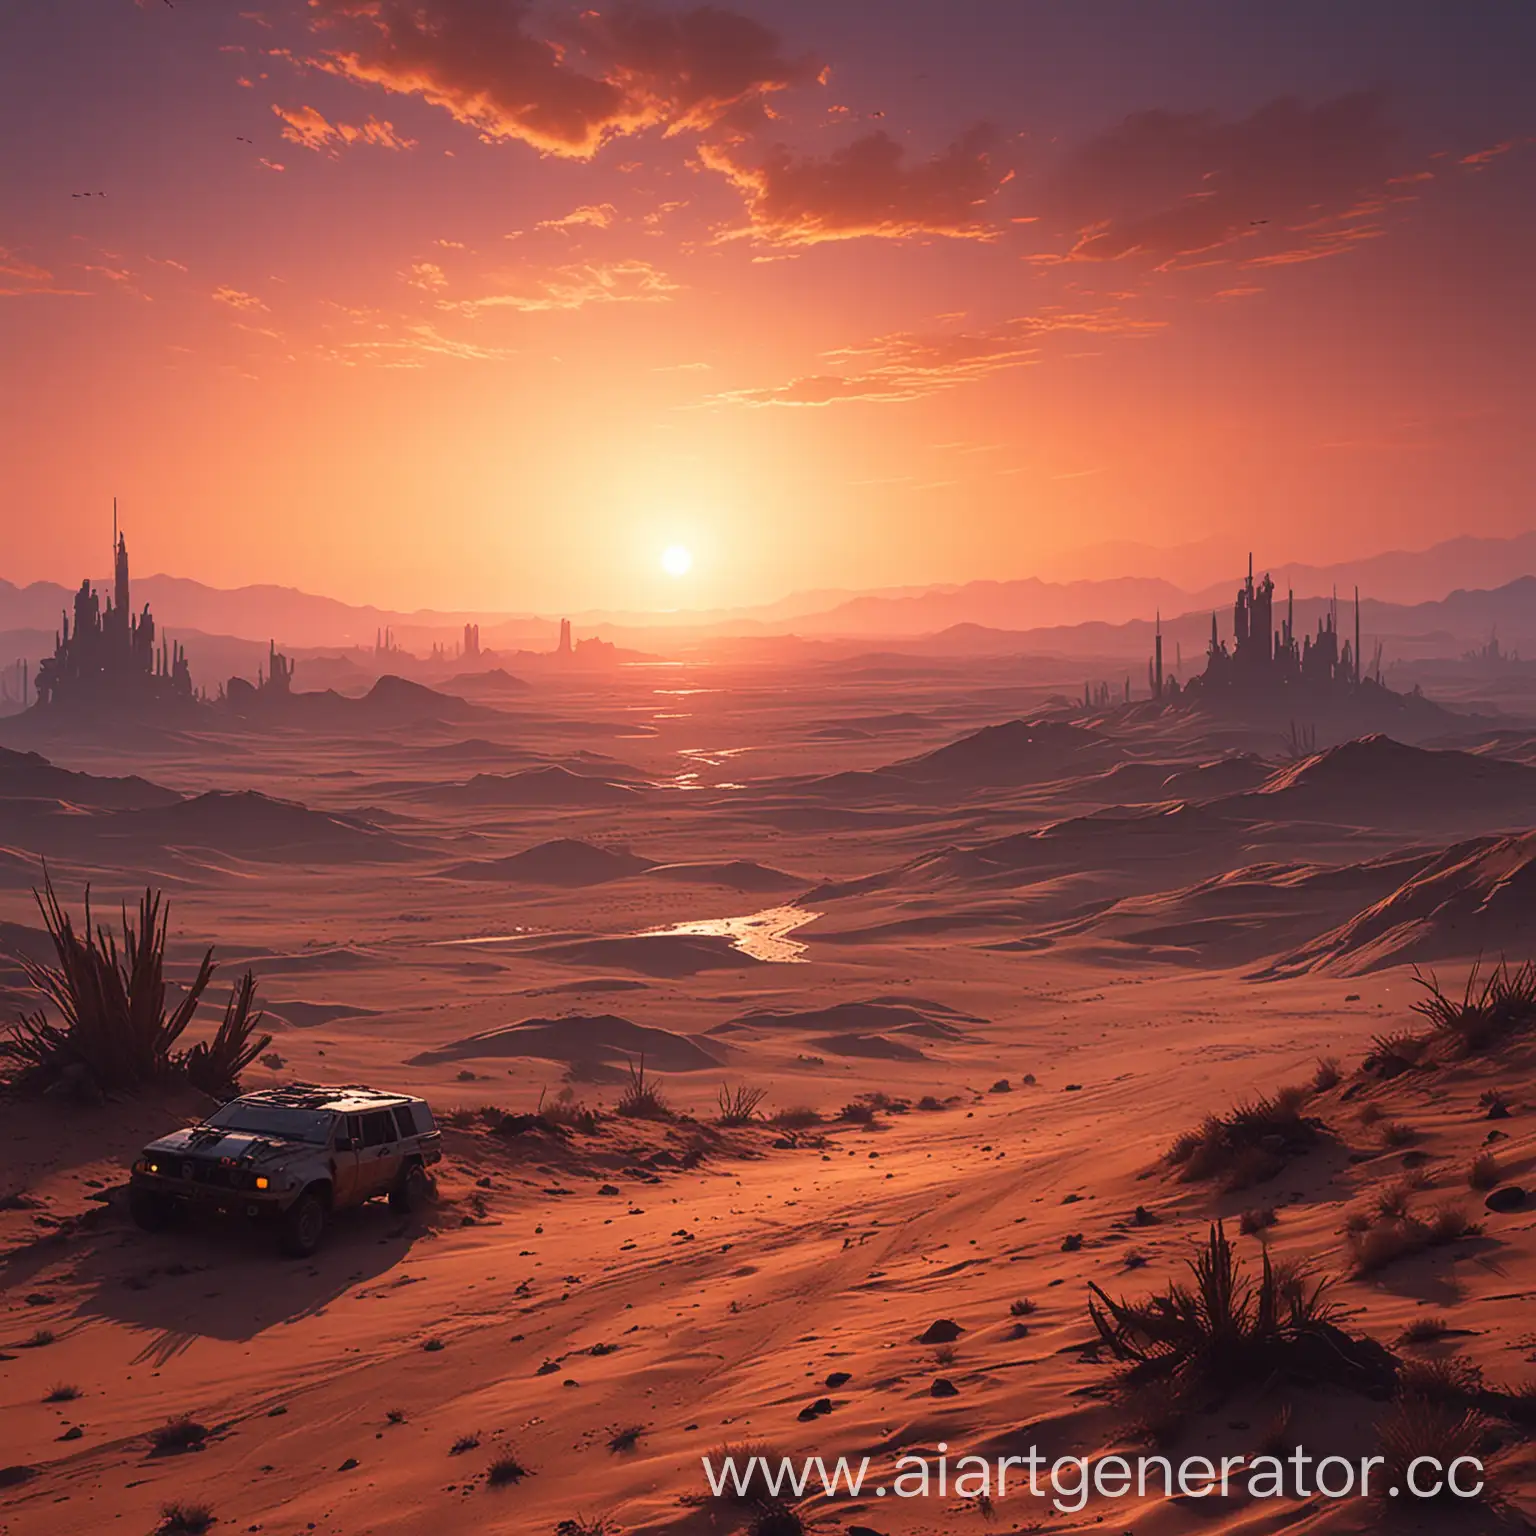 Cyberpunk-Desert-Landscape-at-Sunset-Riat-Cityscape